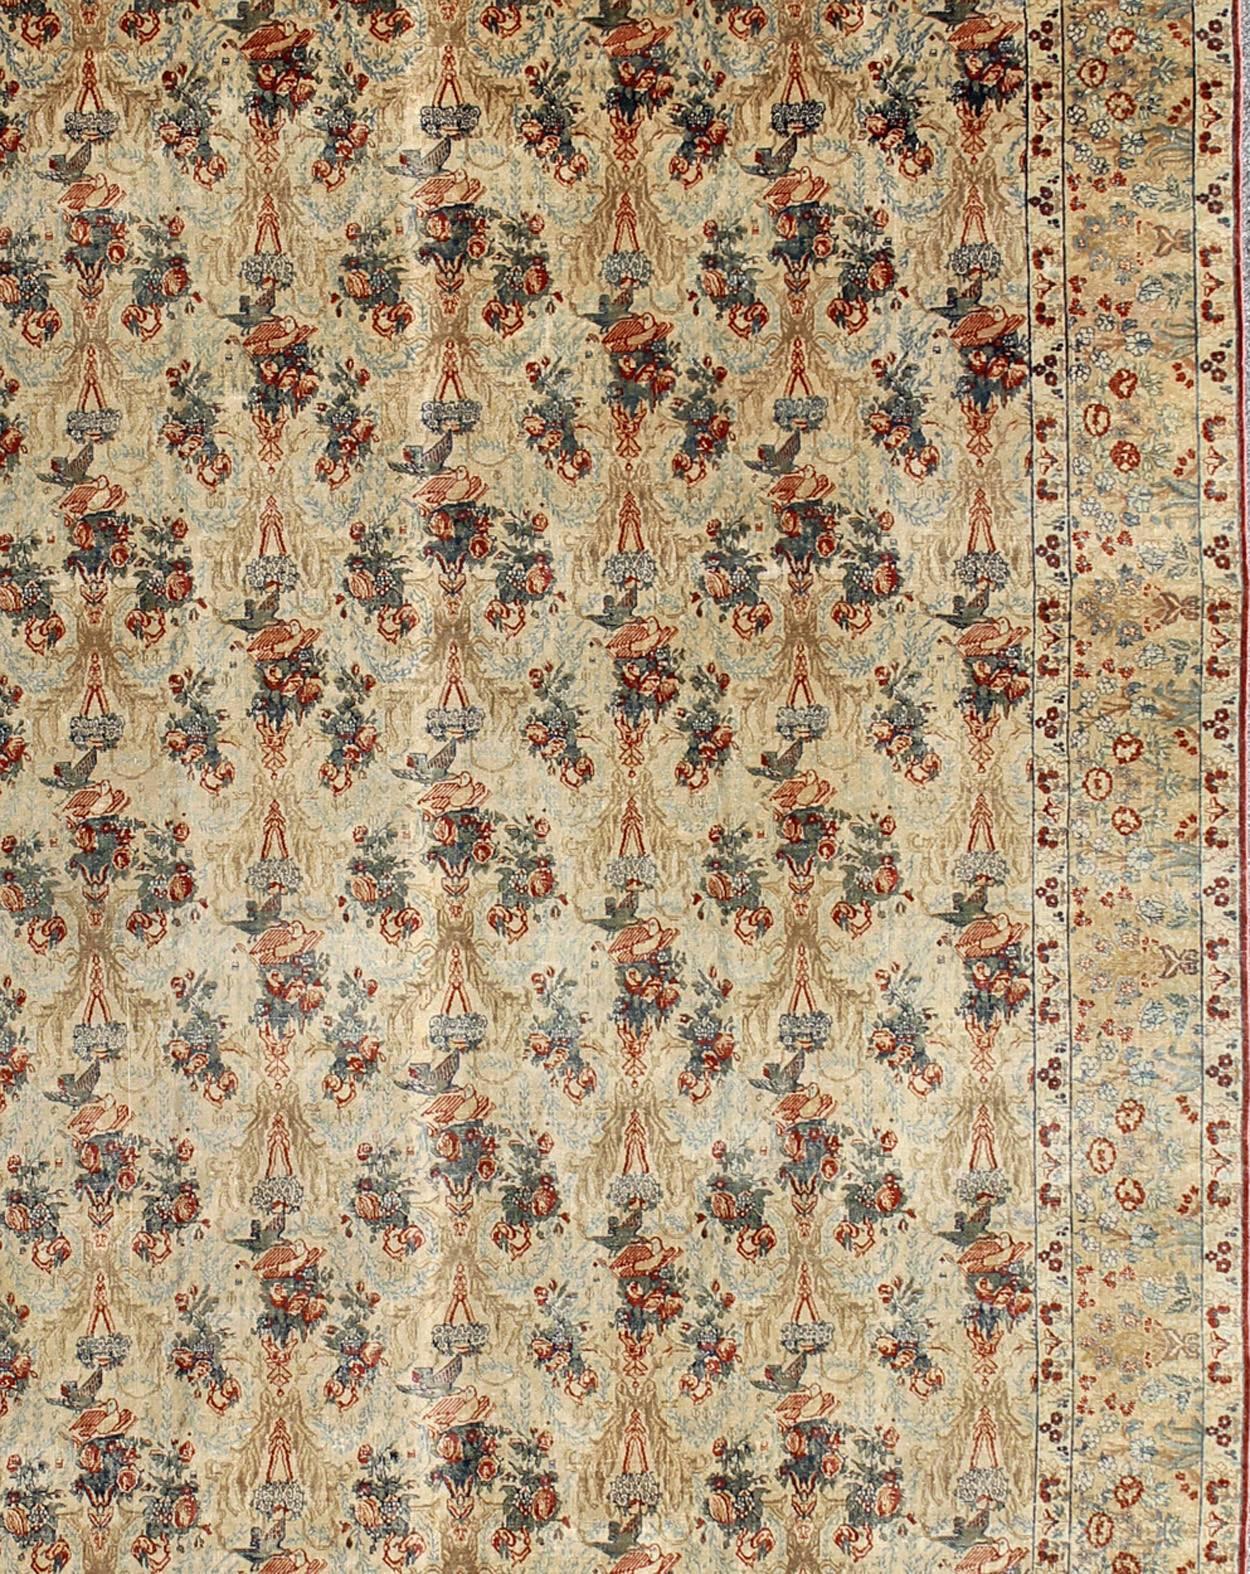 Antique Fine Tabriz Persian Carpet in Ivory Background in Florals & Bird Design In Good Condition For Sale In Atlanta, GA